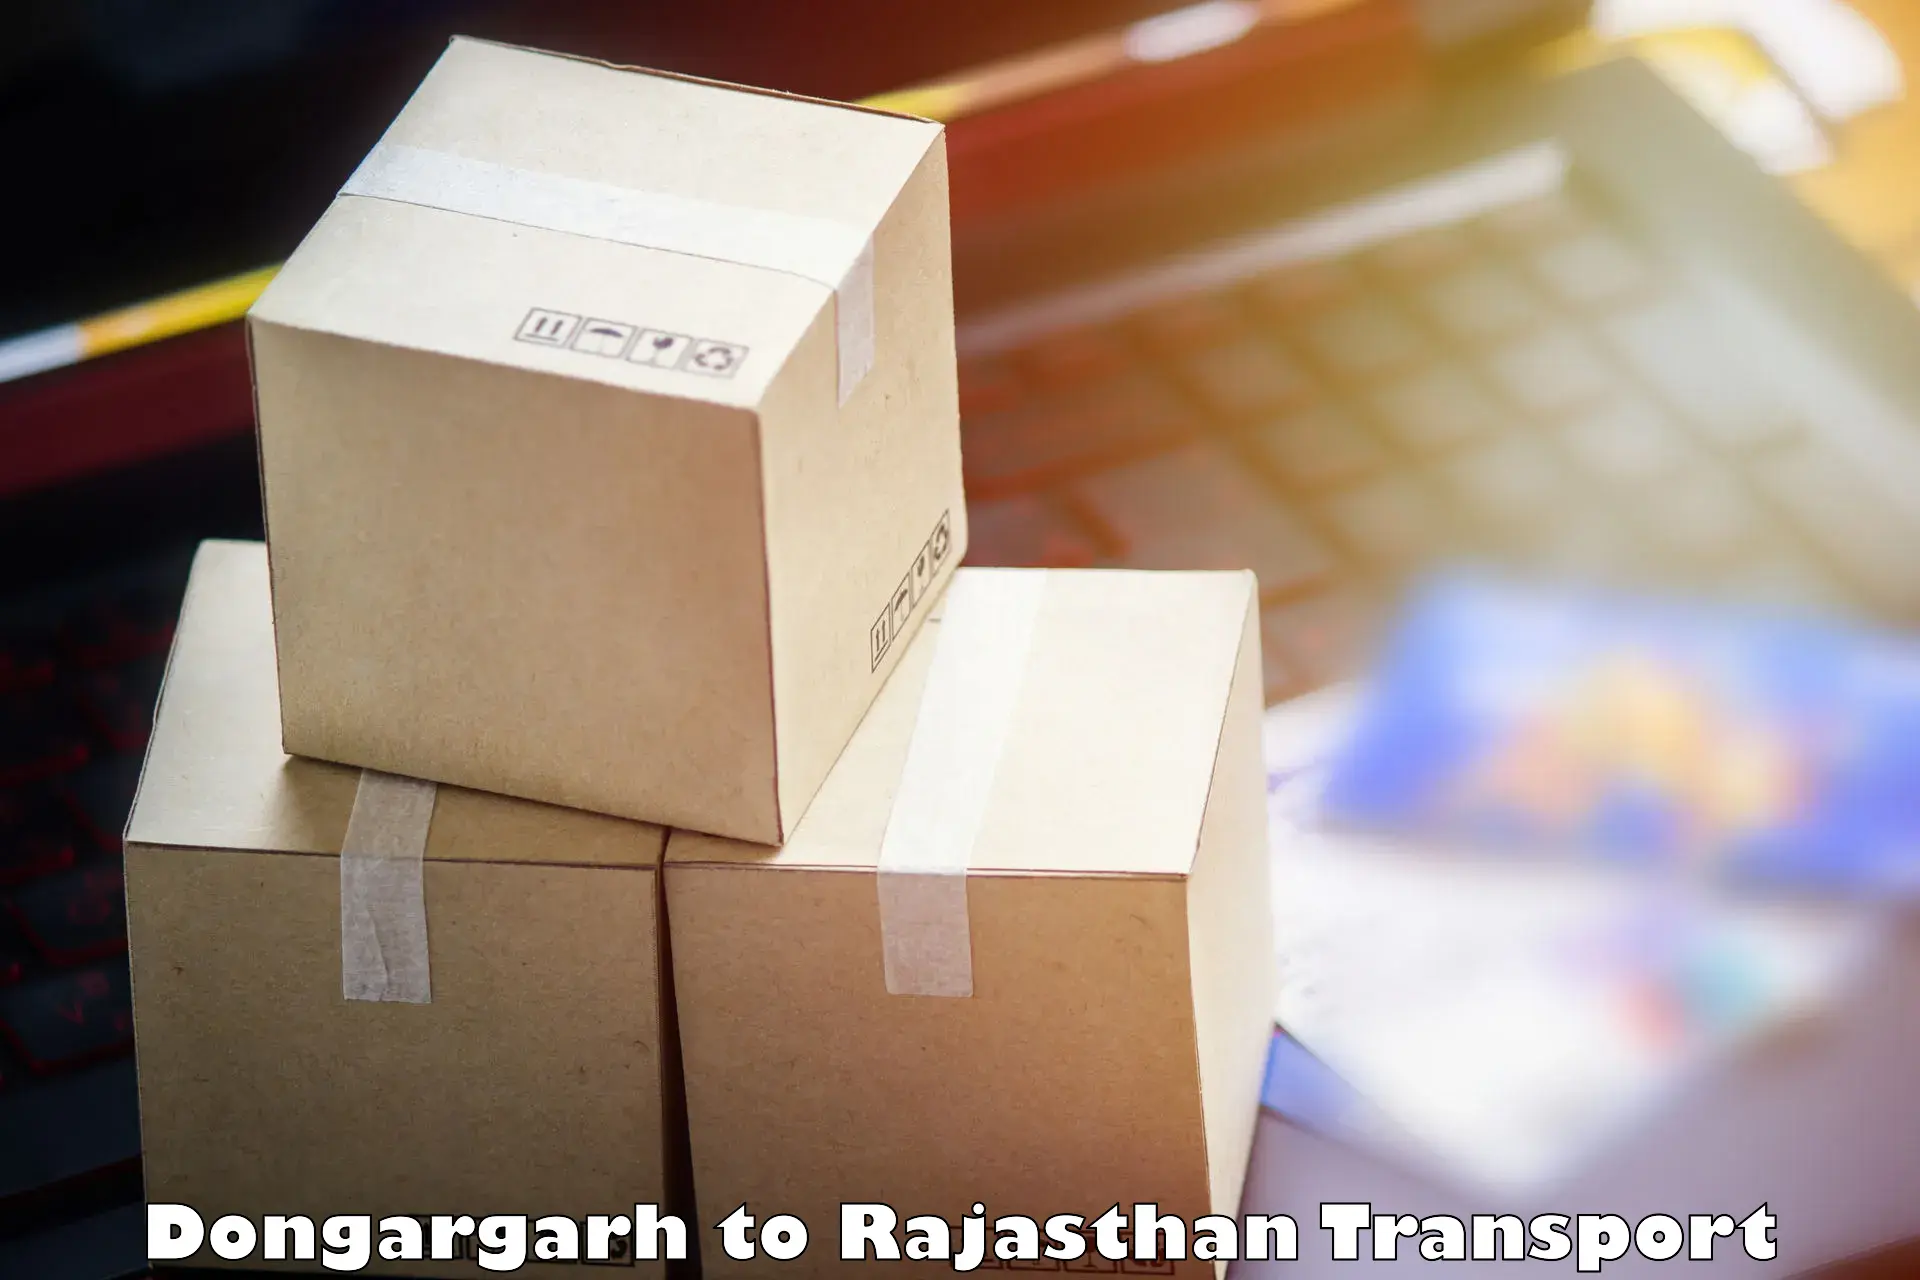 Road transport online services Dongargarh to Jaisalmer